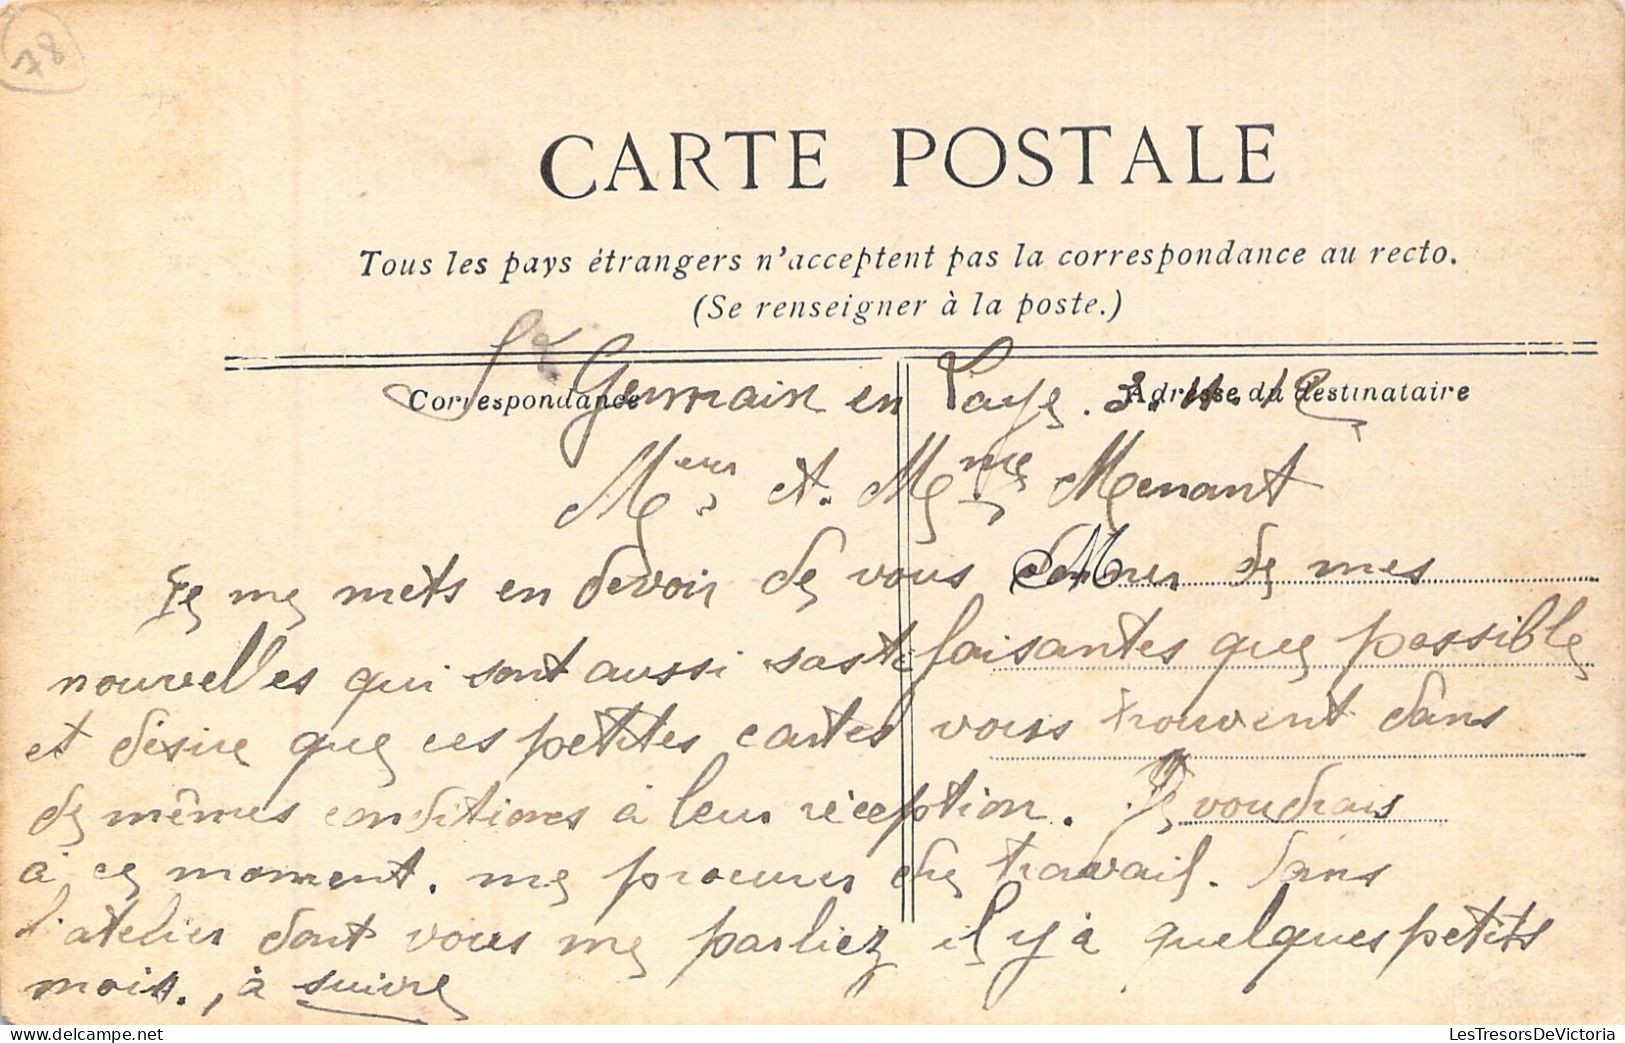 FRANCE - 78 - SAINT GERMAIN EN LAYE - La Gare - Carte Postale Ancienne - St. Germain En Laye